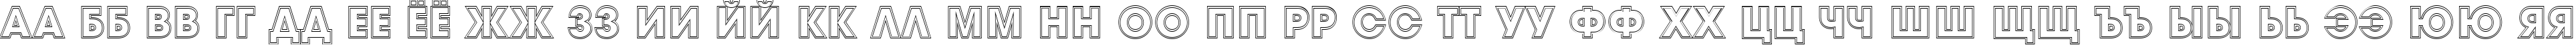 Пример написания русского алфавита шрифтом a_AvanteTitul2Otl Heavy